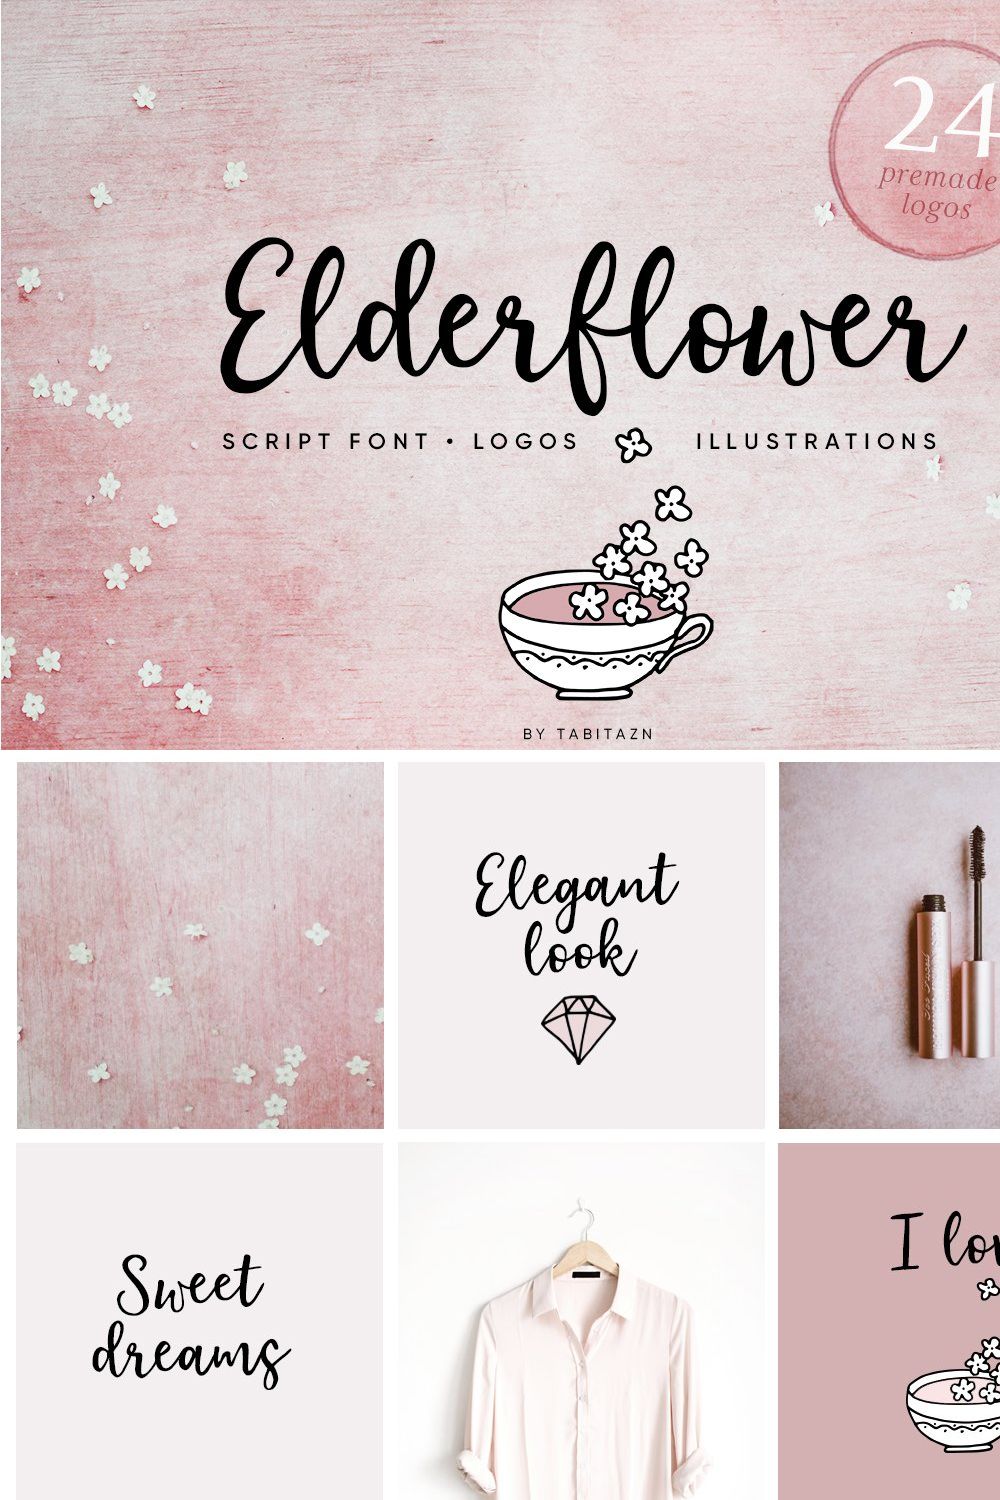 Elderflower script font + logos pinterest preview image.